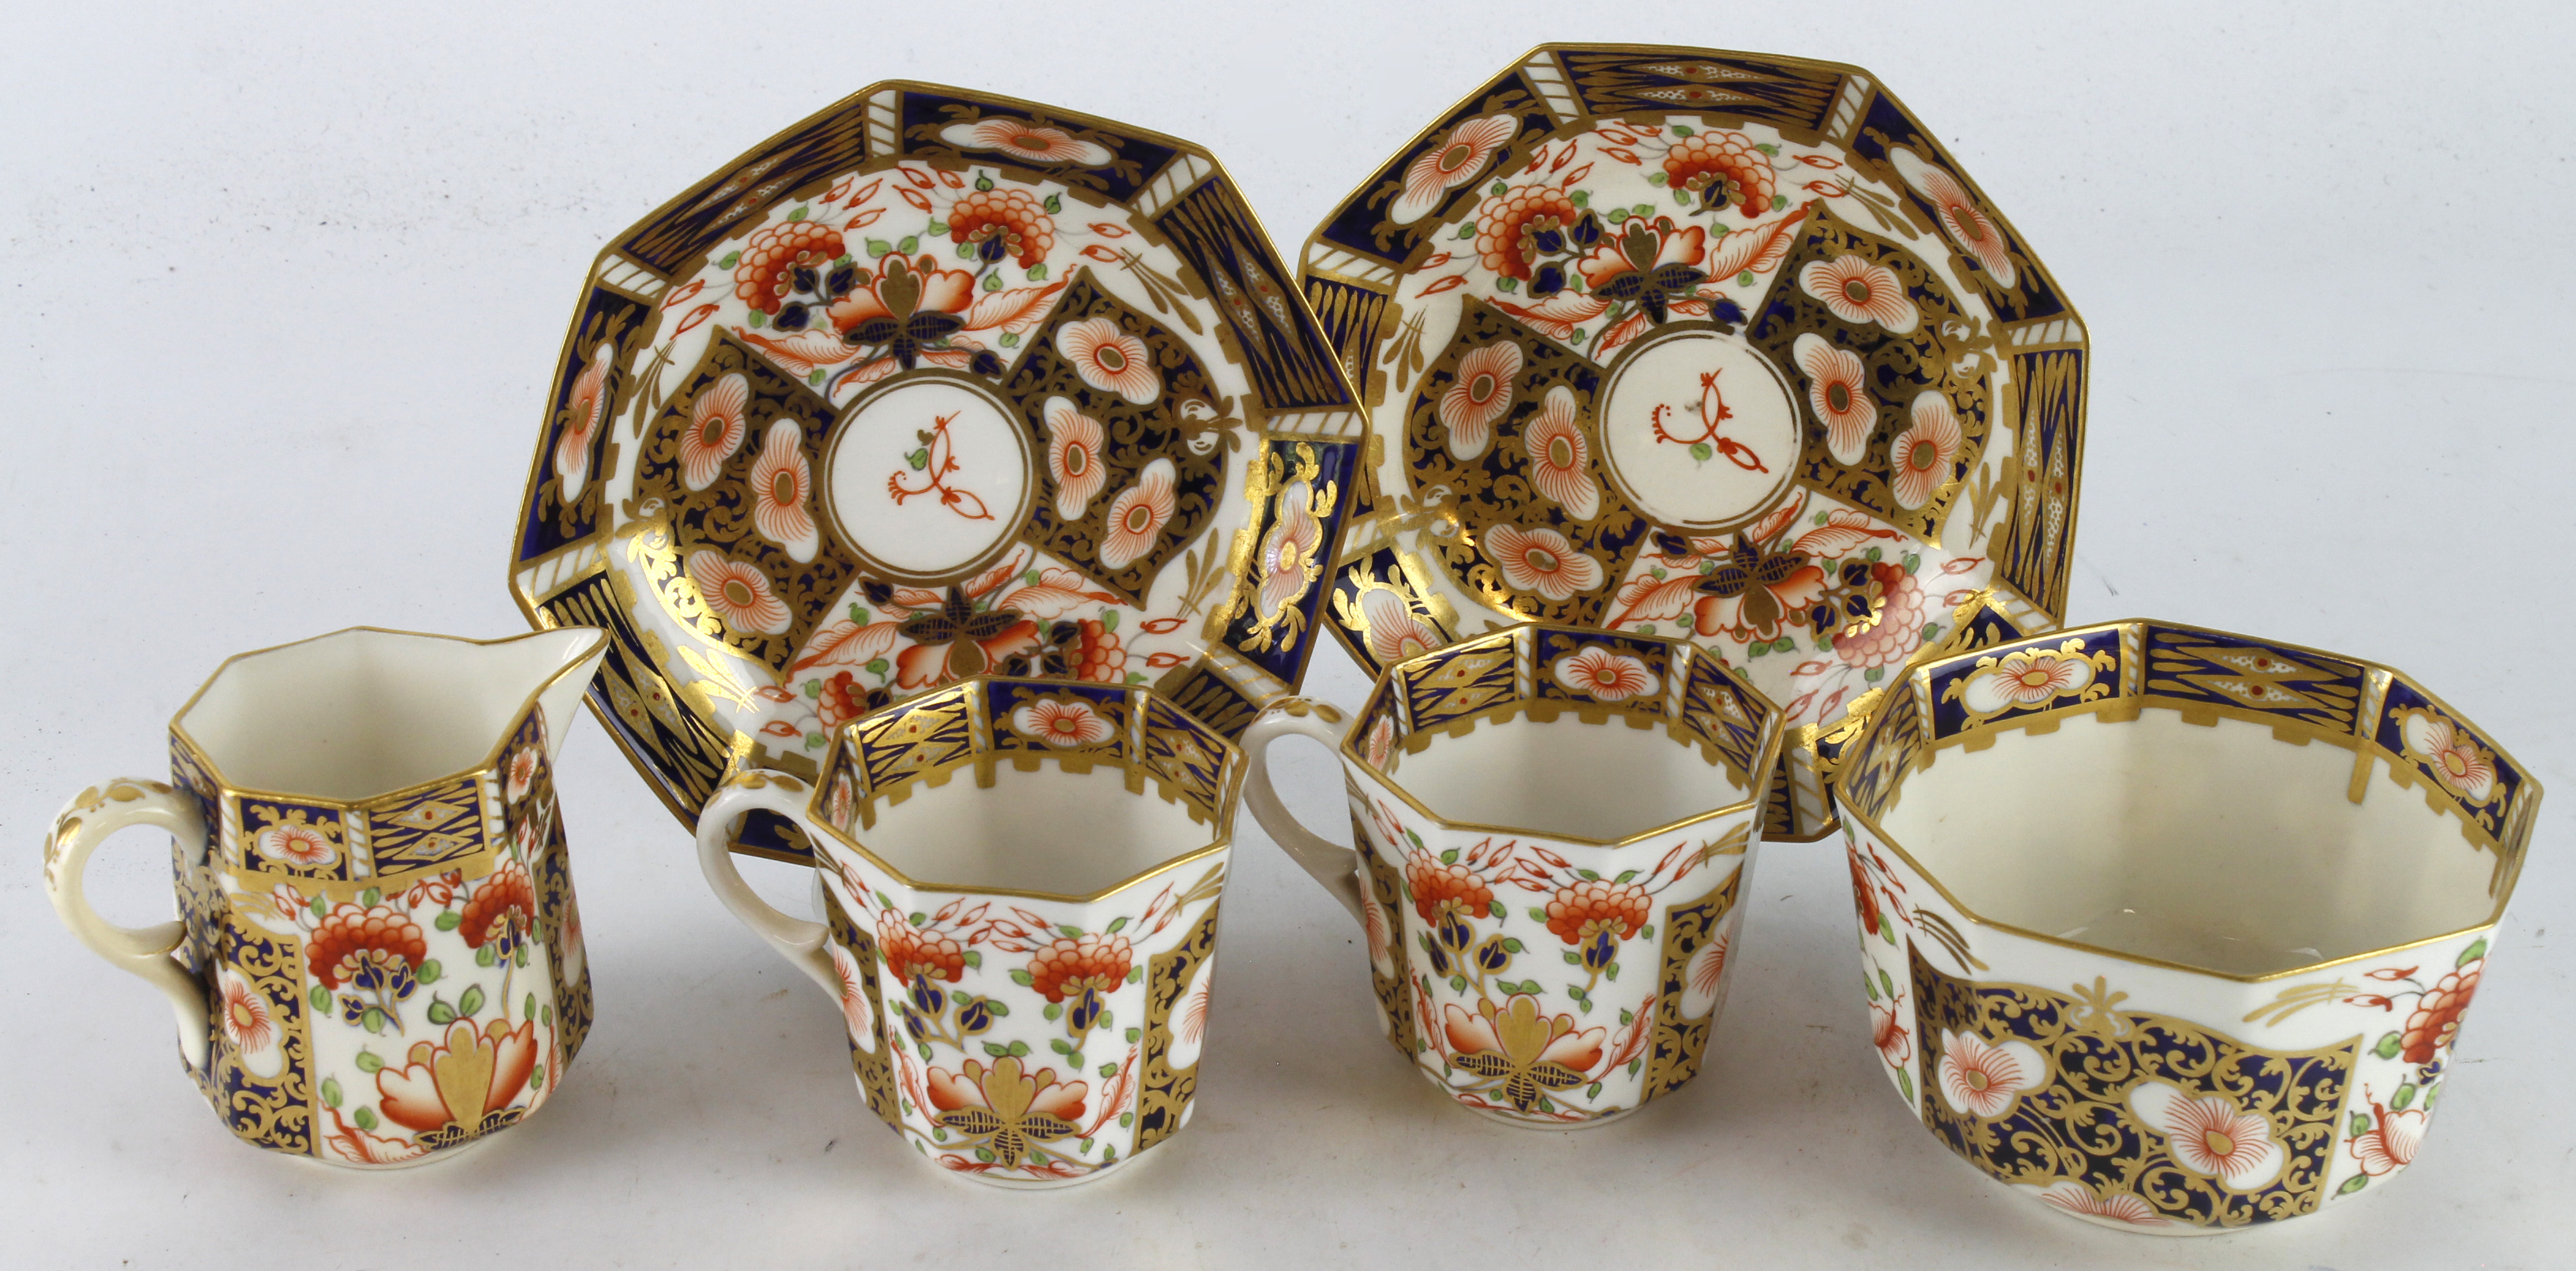 Derby. Two Derby tea cups & saucers, sugar bowl & milk jug in the Traditional Imari pattern, circa